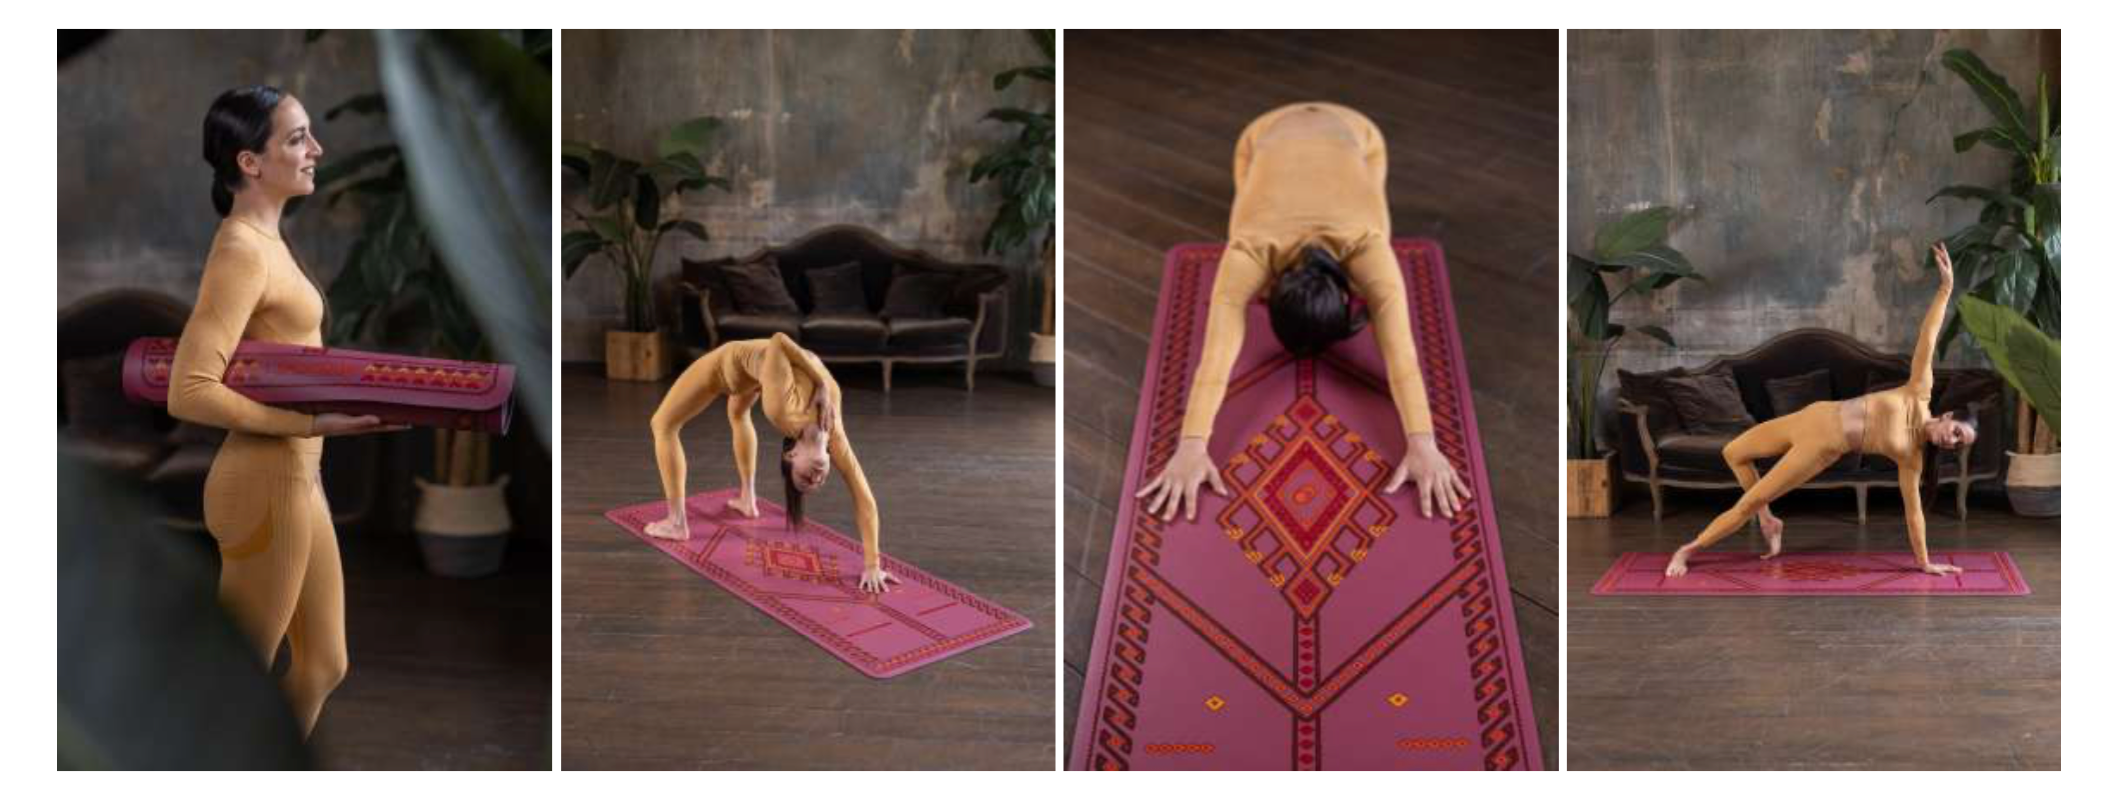 Liforme launches new, Majestic Carpet yoga mat - Essex-TV